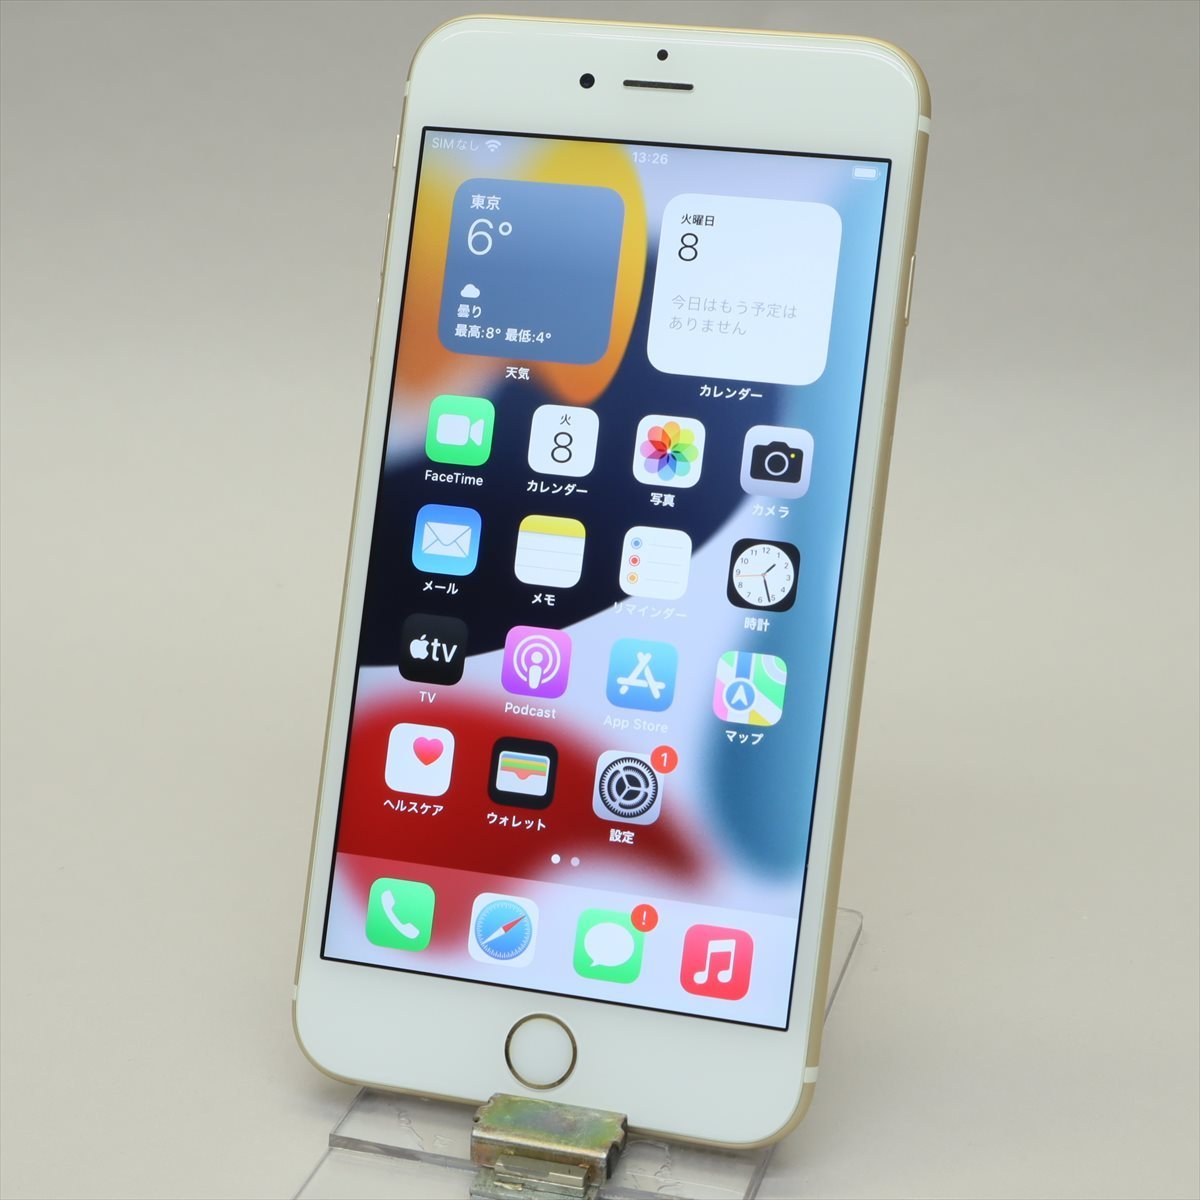 Apple iPhone6s Plus 128GB Gold A1687 MKUF2J/A バッテリ94% SIM 